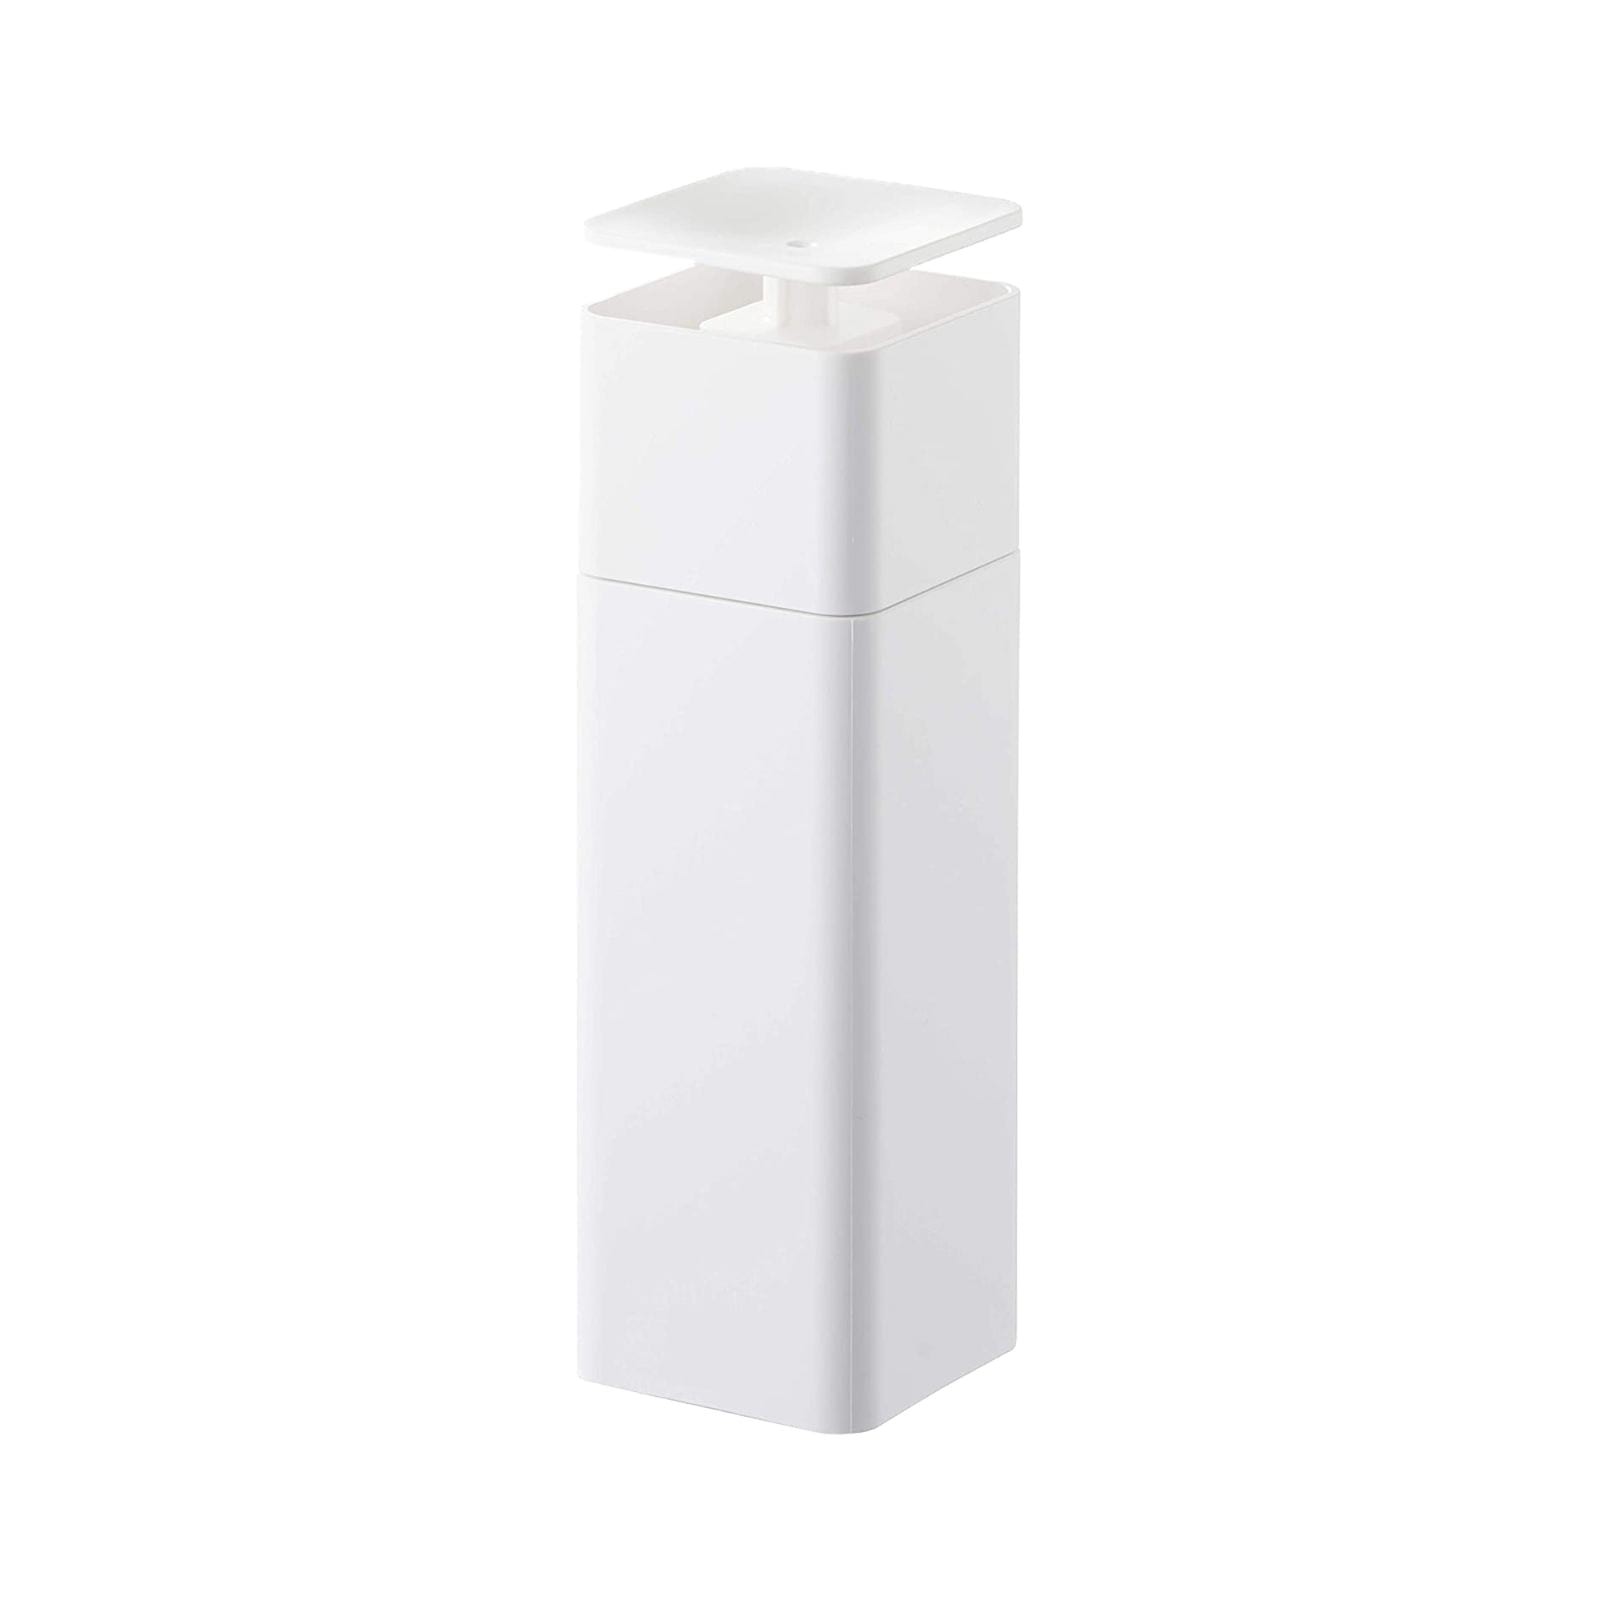 Tower Push Επιτραπέζιο Dispenser / Aντλία Σαπουνιού 251ml (Λευκό) - Yamazaki